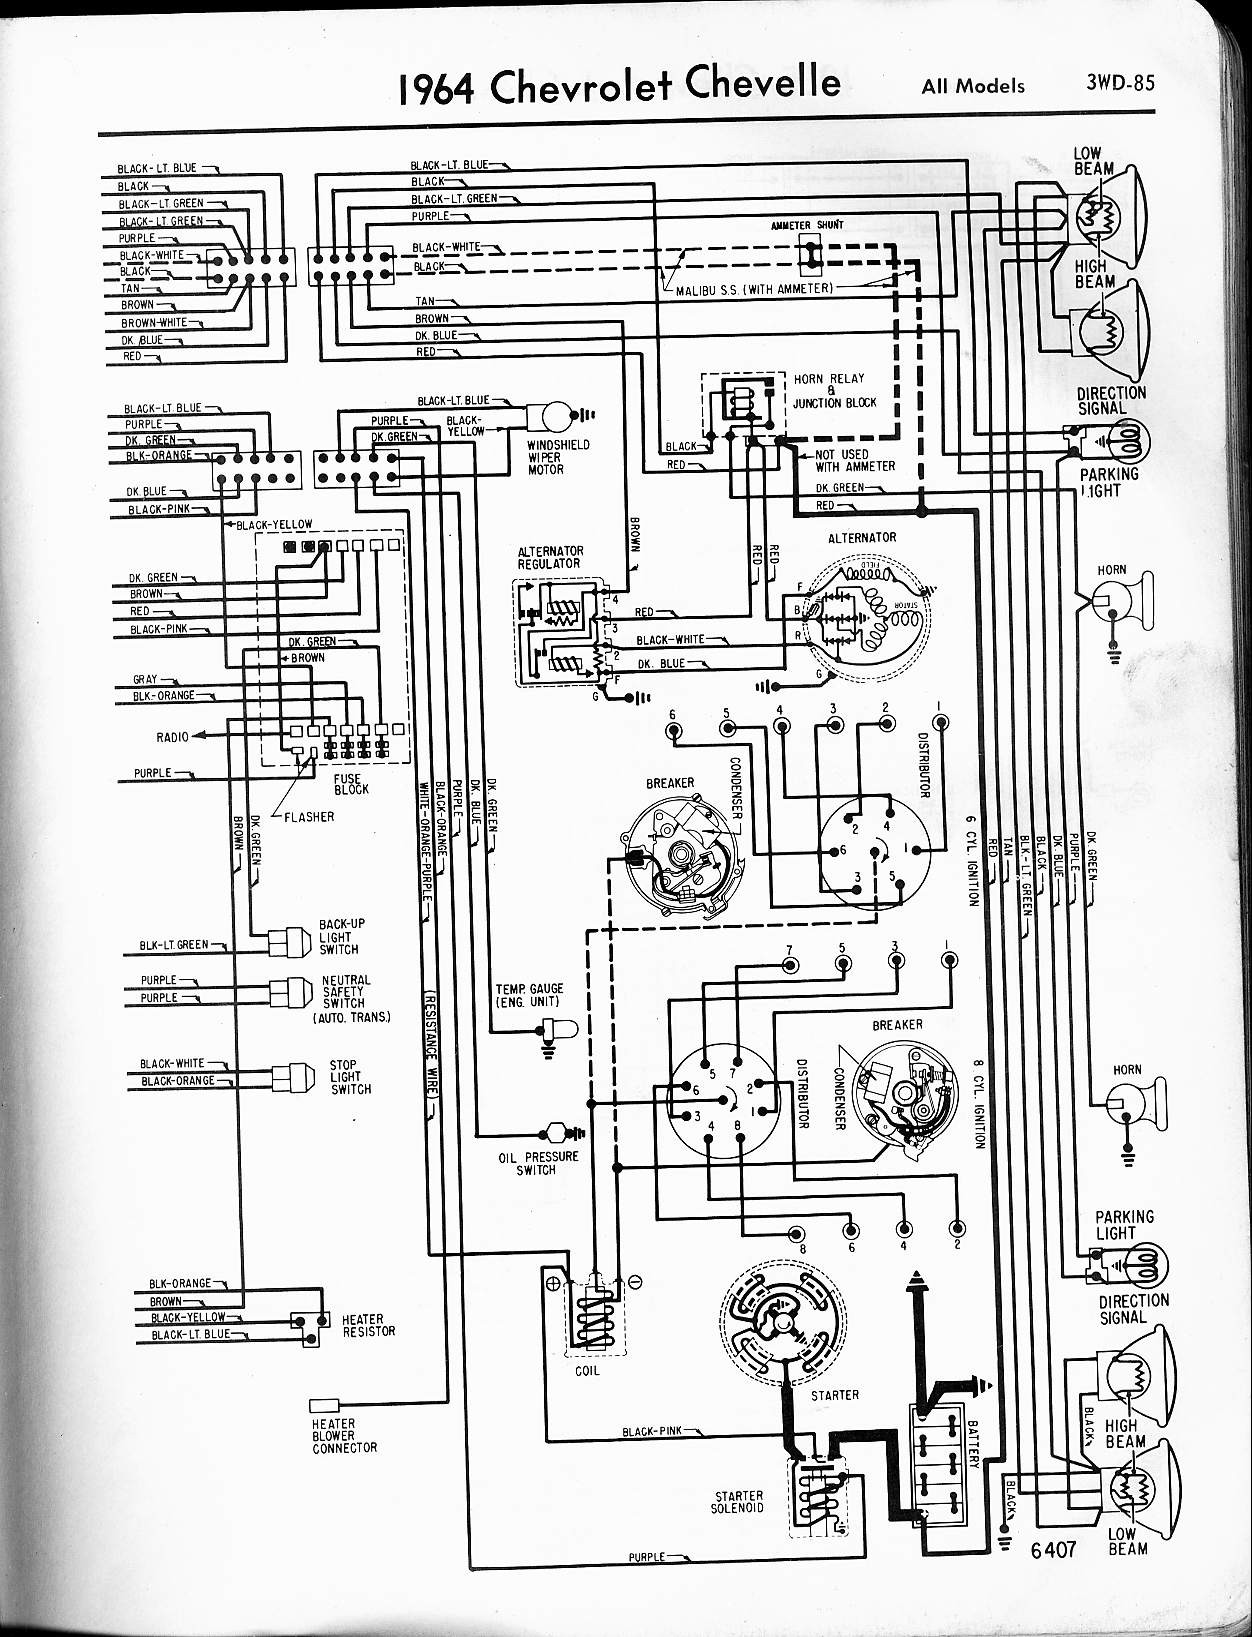 2003 Chevy Malibu Engine Diagram 57 65 Chevy Wiring Diagrams Of 2003 Chevy Malibu Engine Diagram